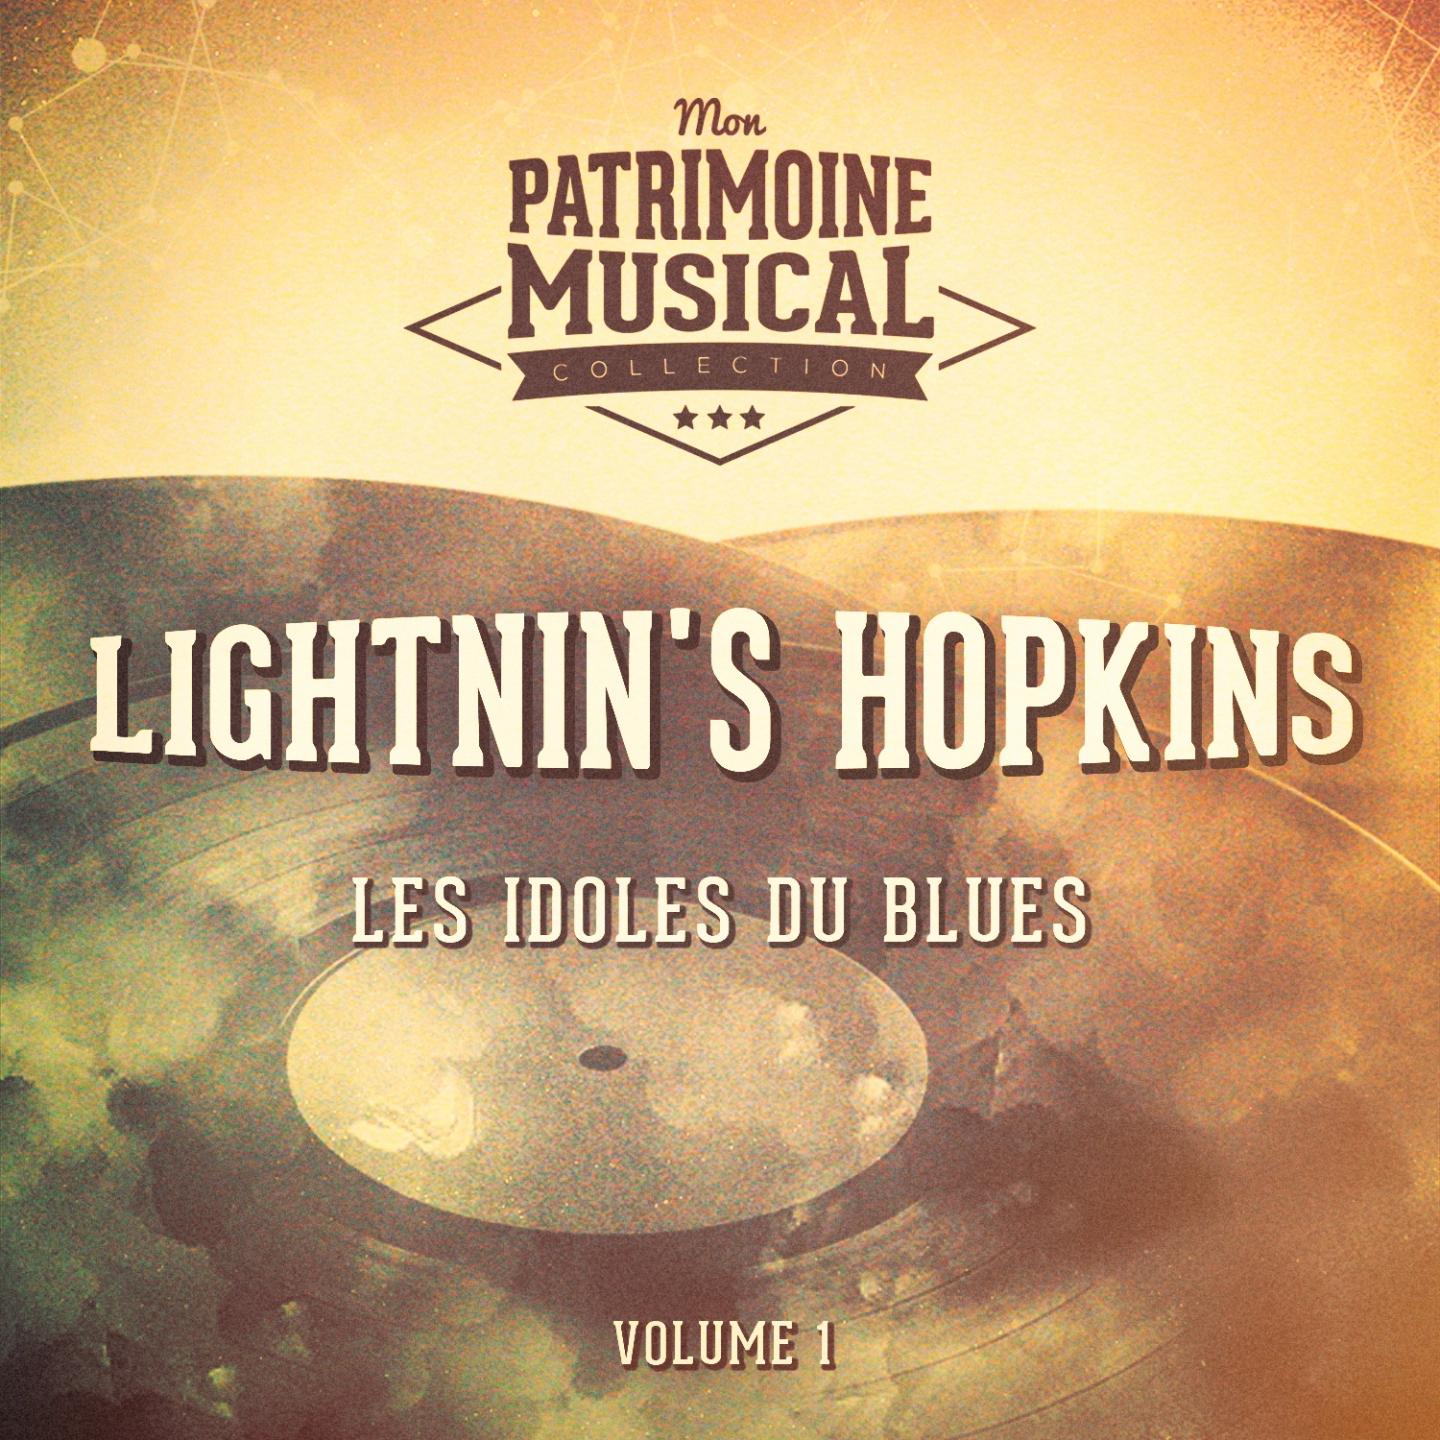 Les Idoles Du Blues: Lightnin' Hopkins, Vol. 1